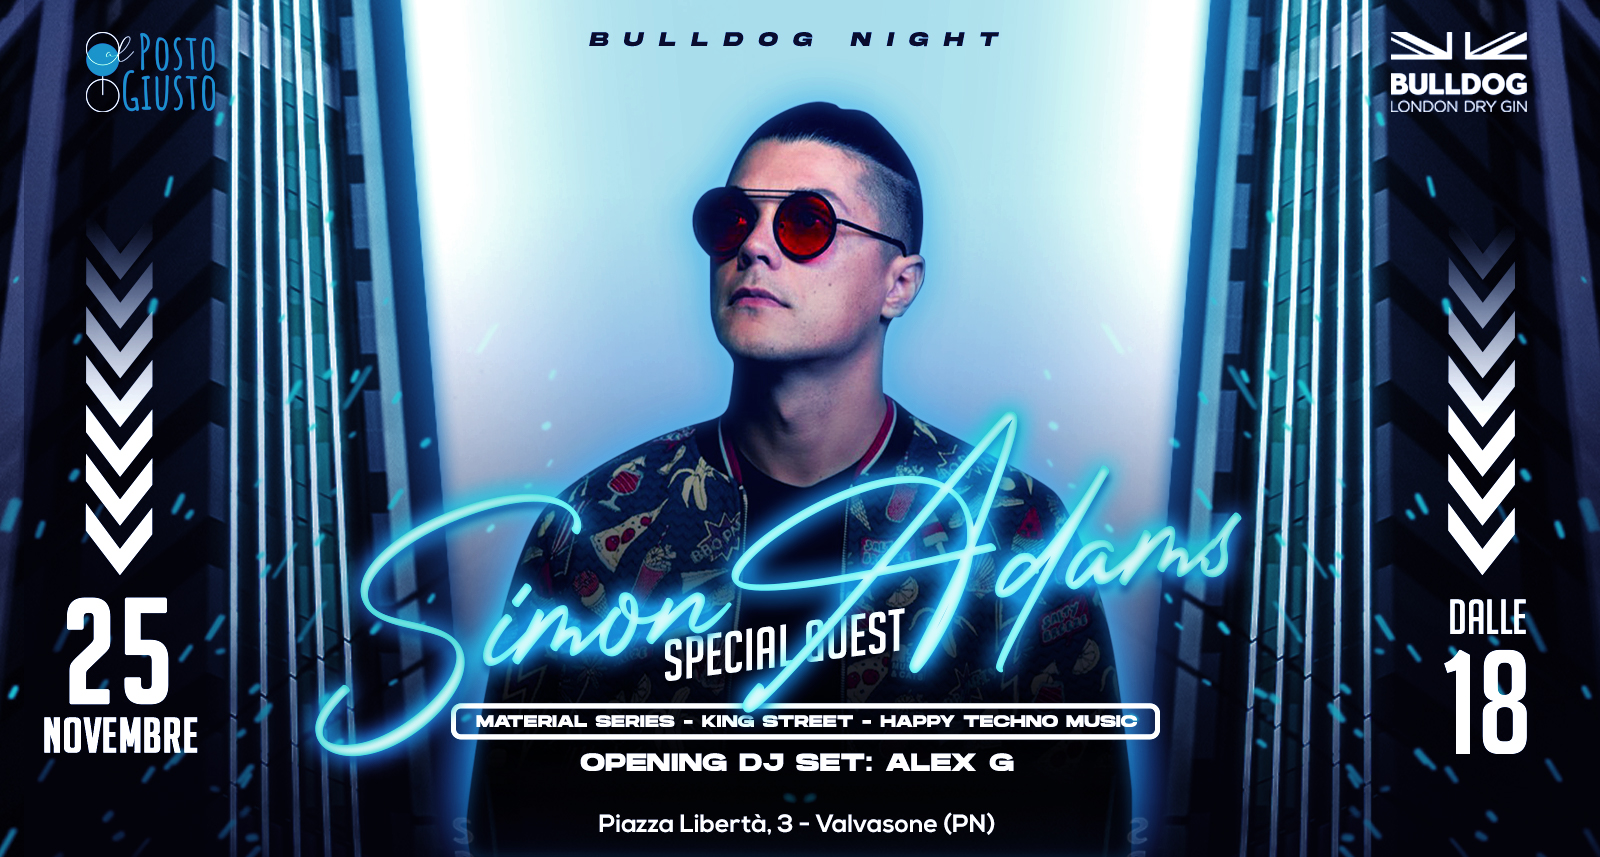 Bulldog Night | Simon Adams Special Guest